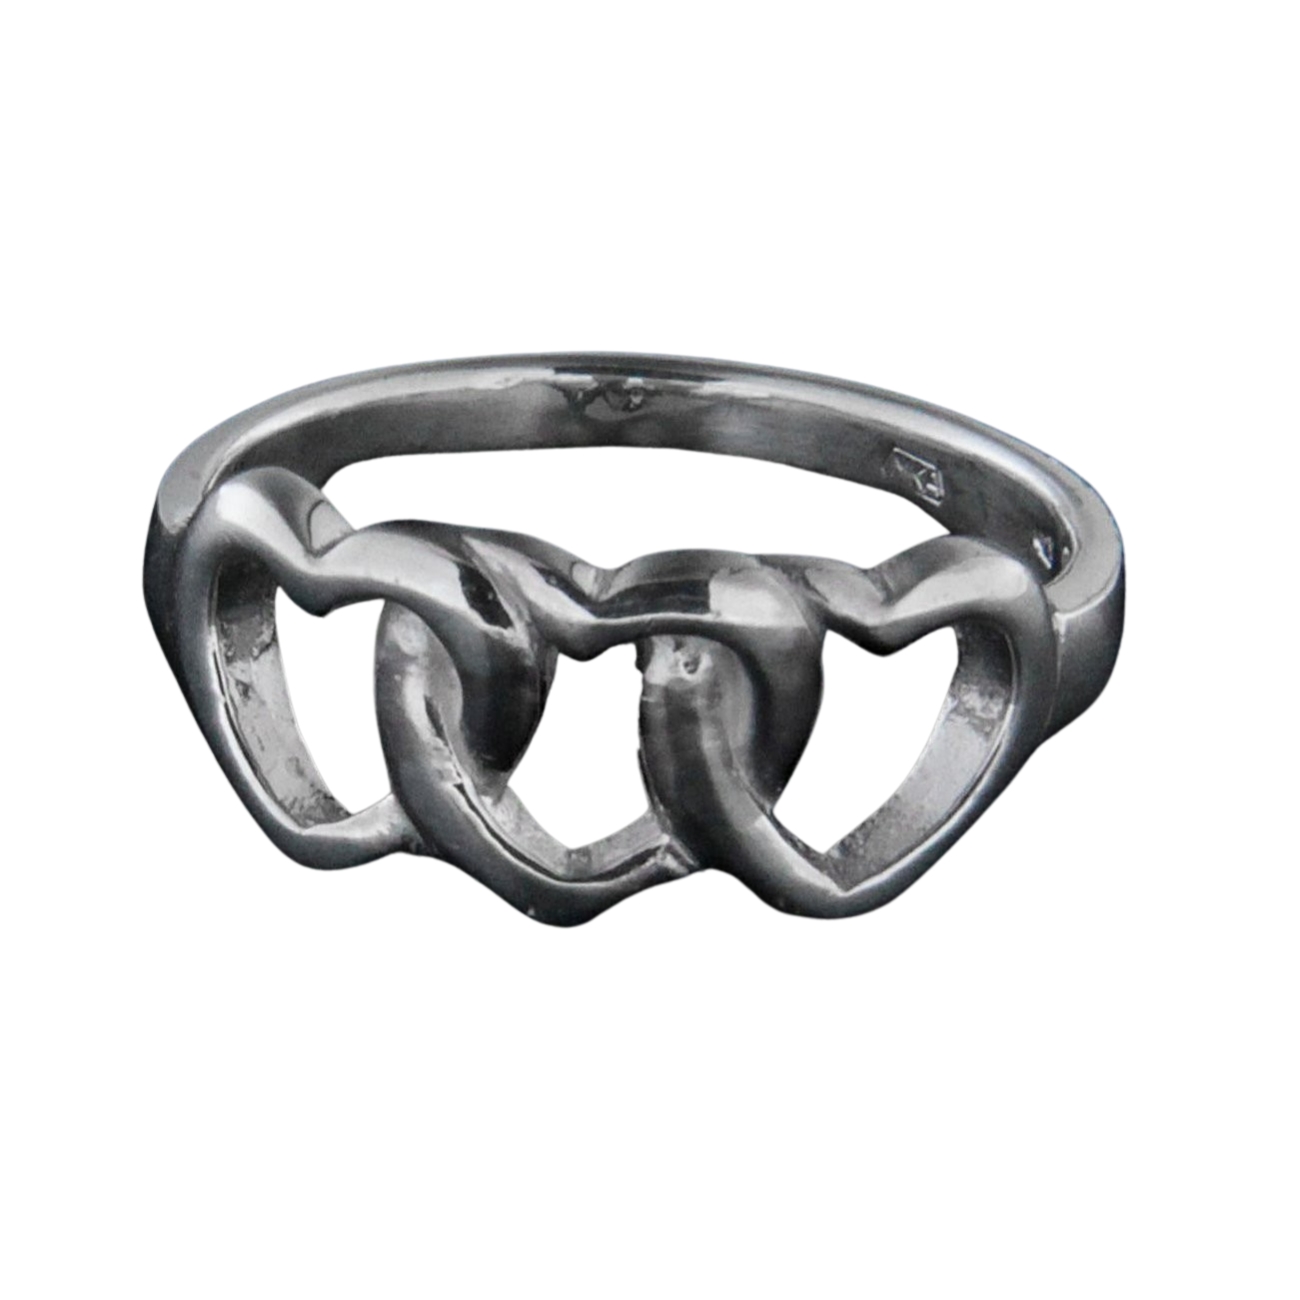 Stříbrný prsten 36071